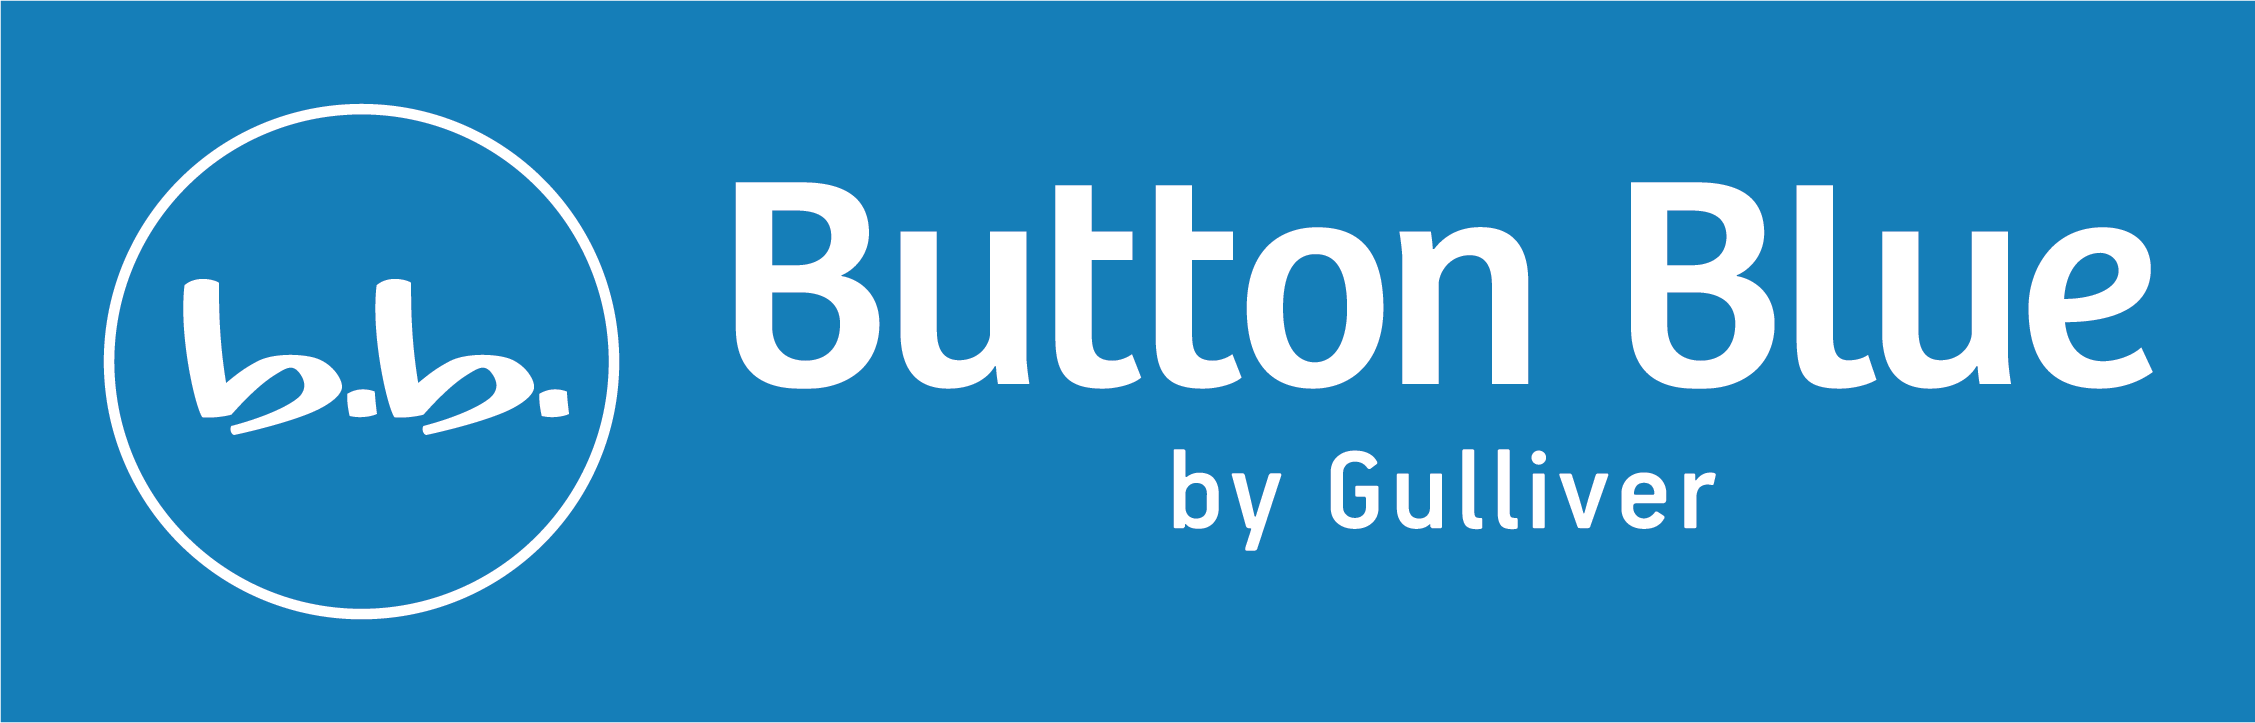 Детский интернет магазин button blue. Баттон Блю логотип. Button Blue магазин. Button одежда. Button Blue пакет.